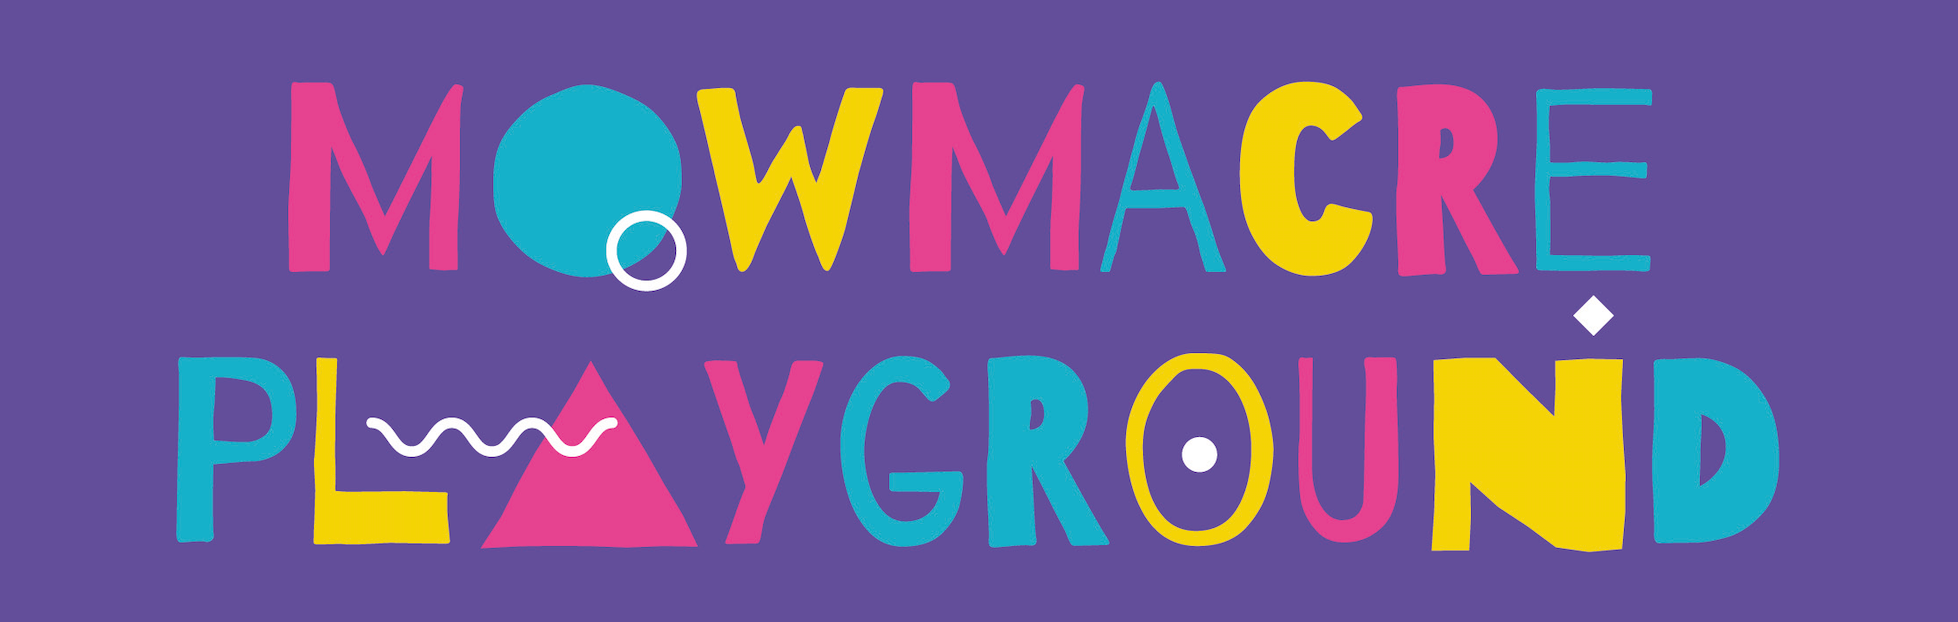 Mowmacre Playground logo